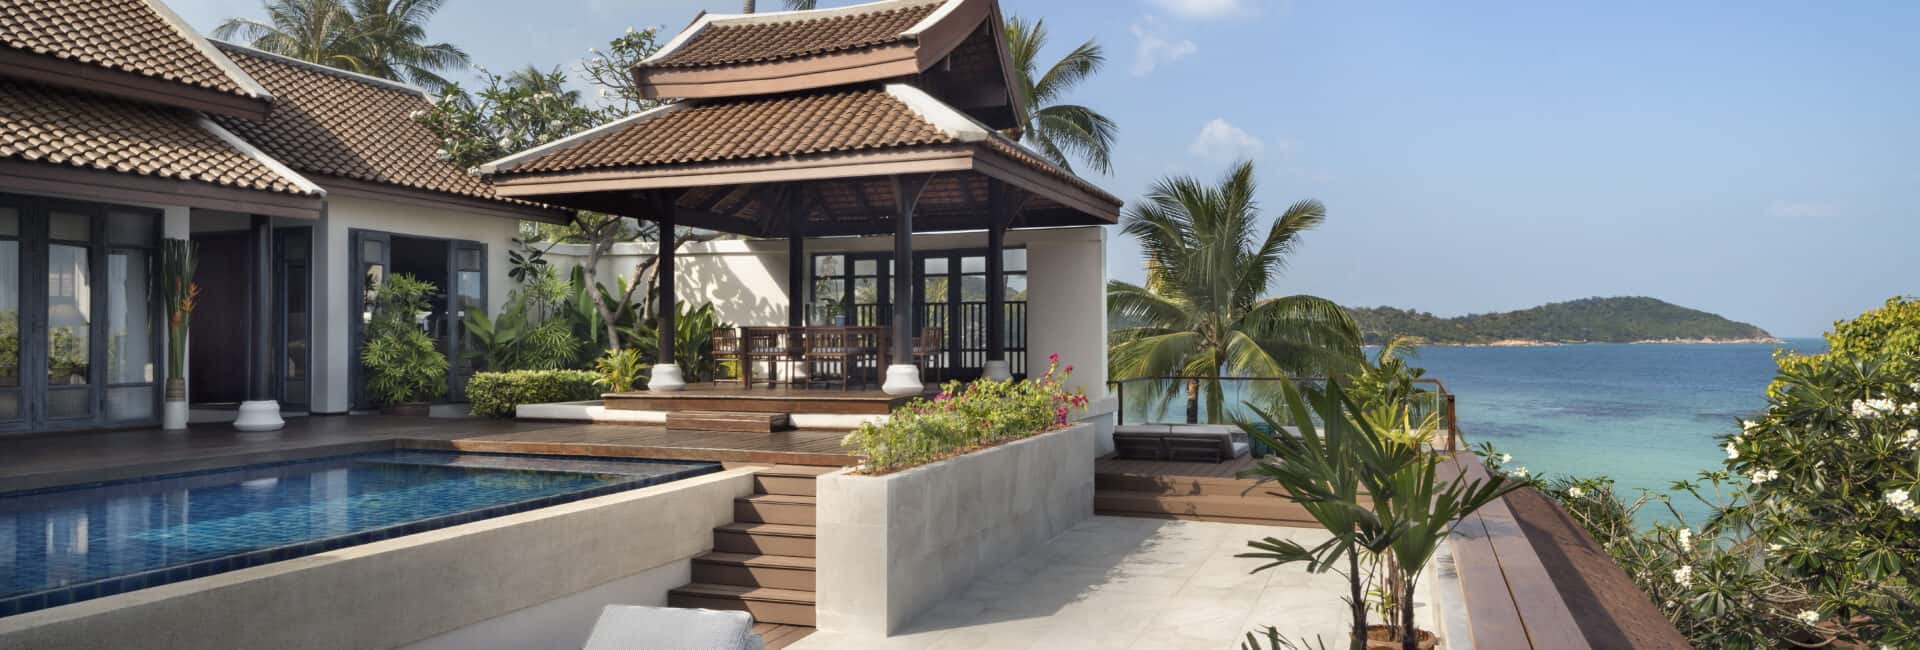 Anantara Lawana Koh Samui Resort - Two Bedroom Lawana Sea View Pool Villa